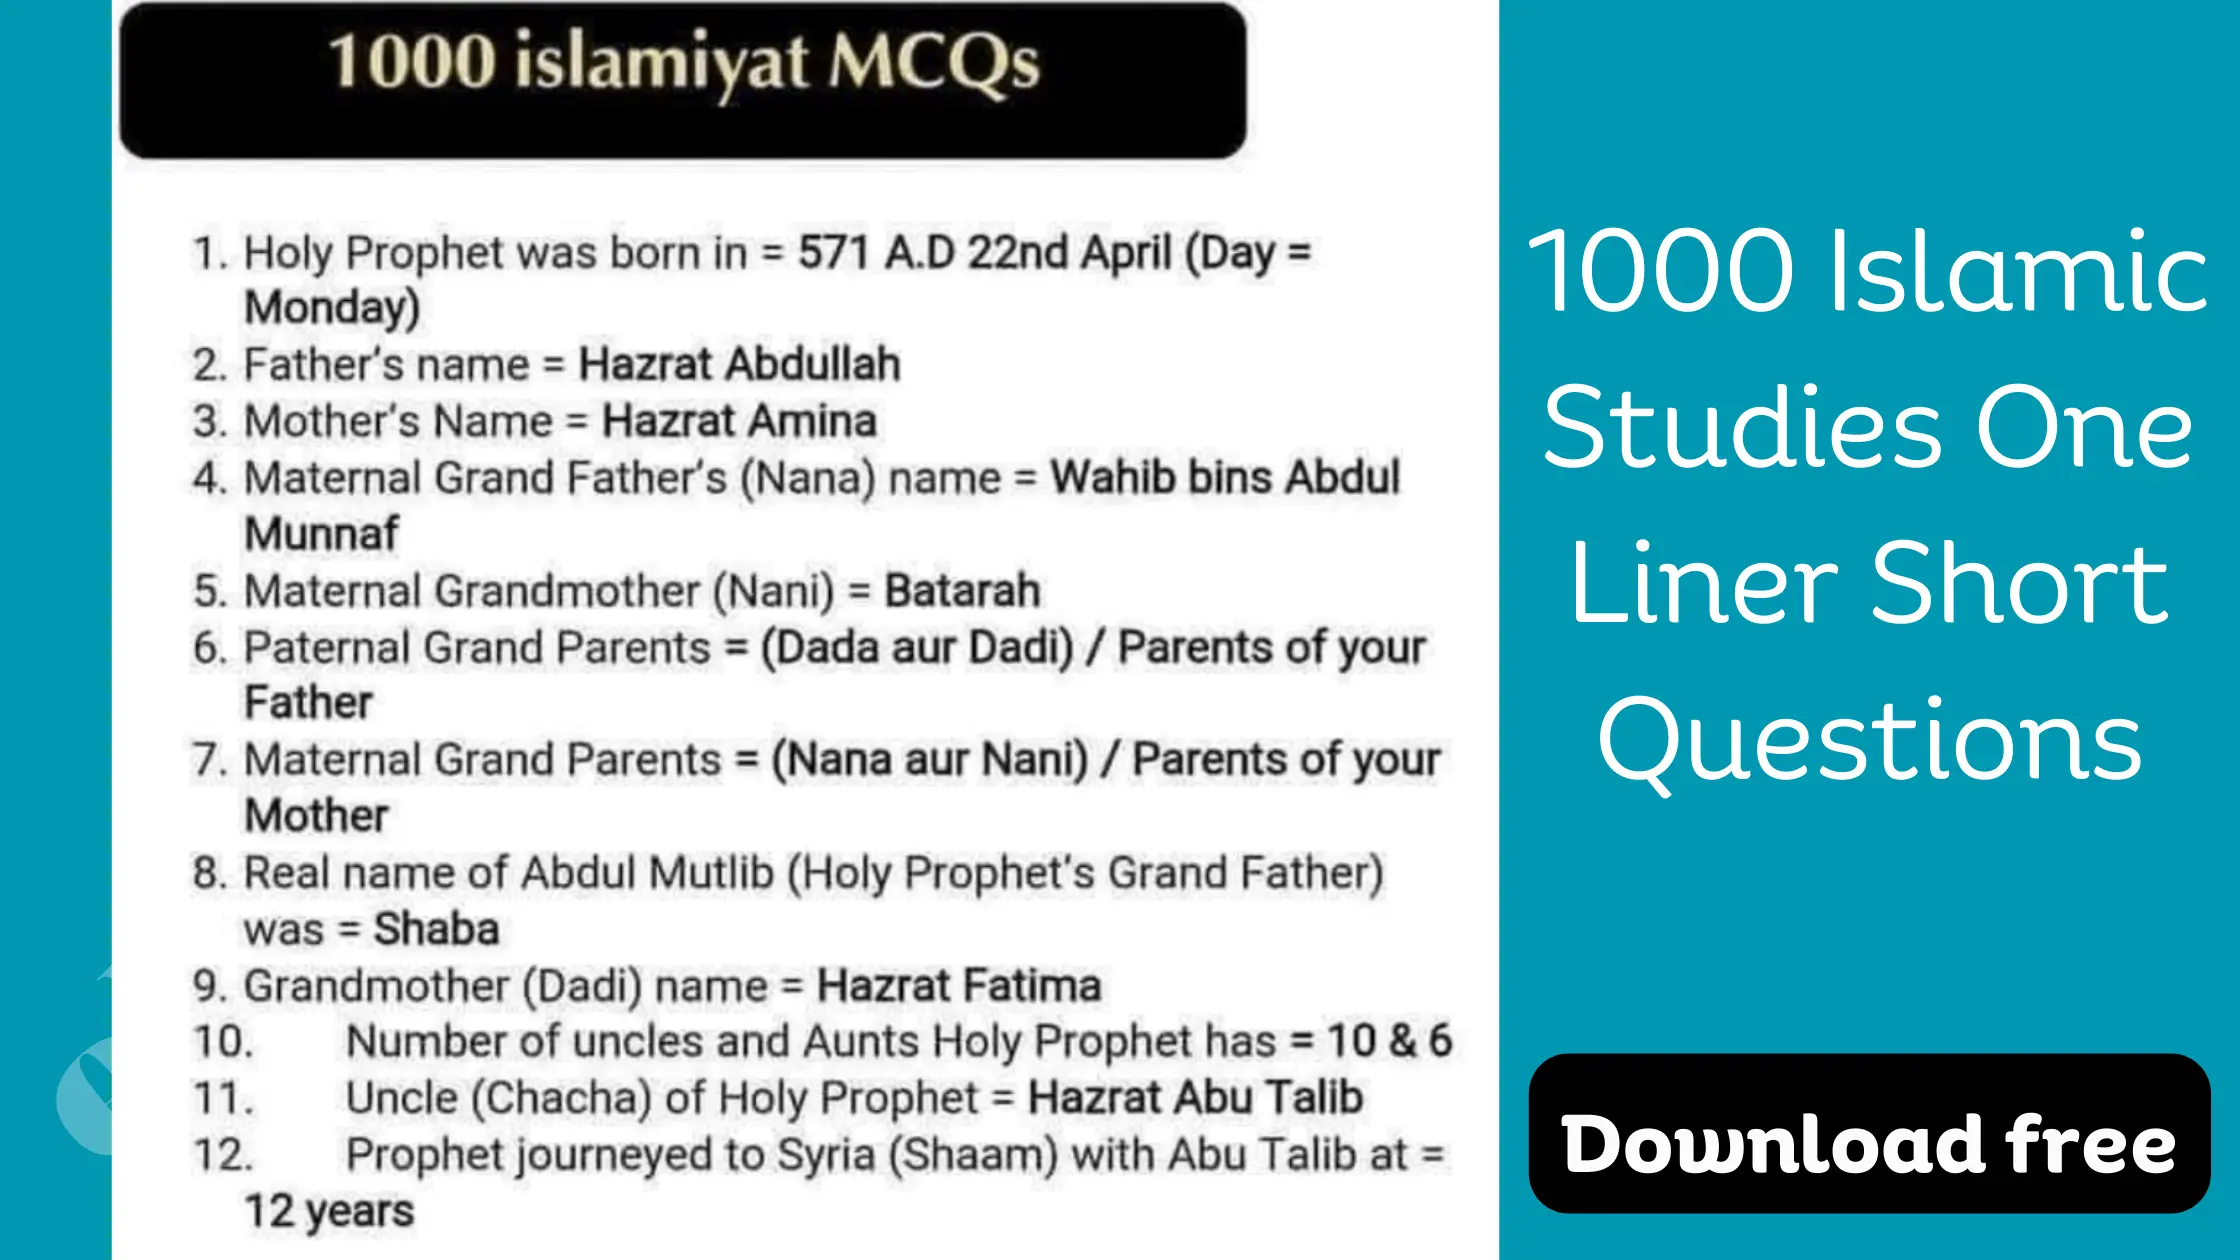 1000 Islamic Studies One Liner Short Questions